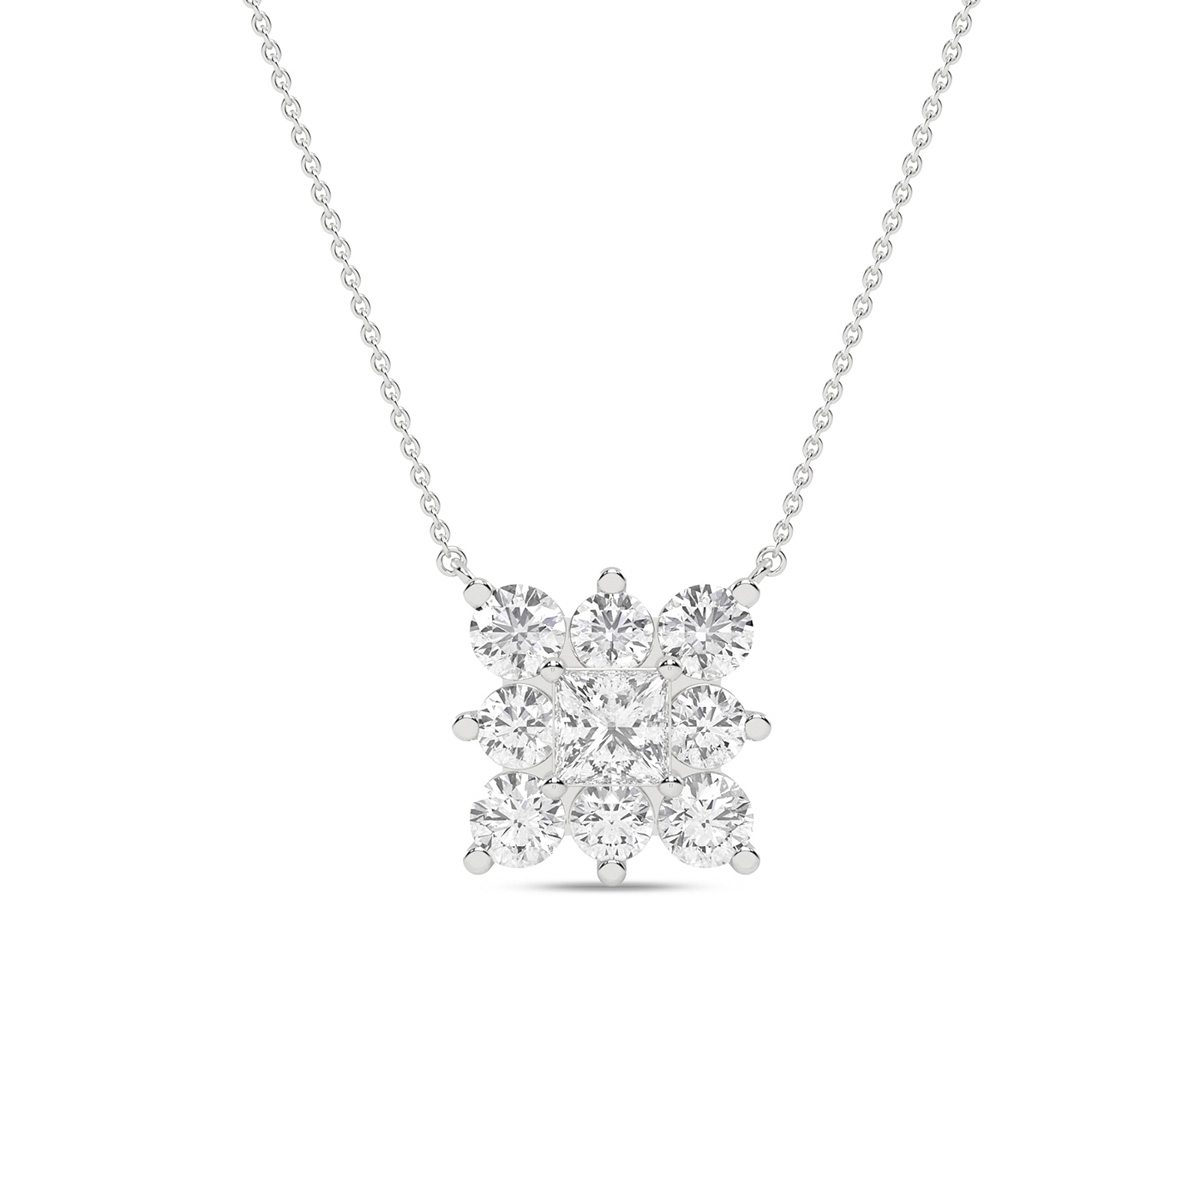 HE52809UWD4WN
14K white gold diamond necklace